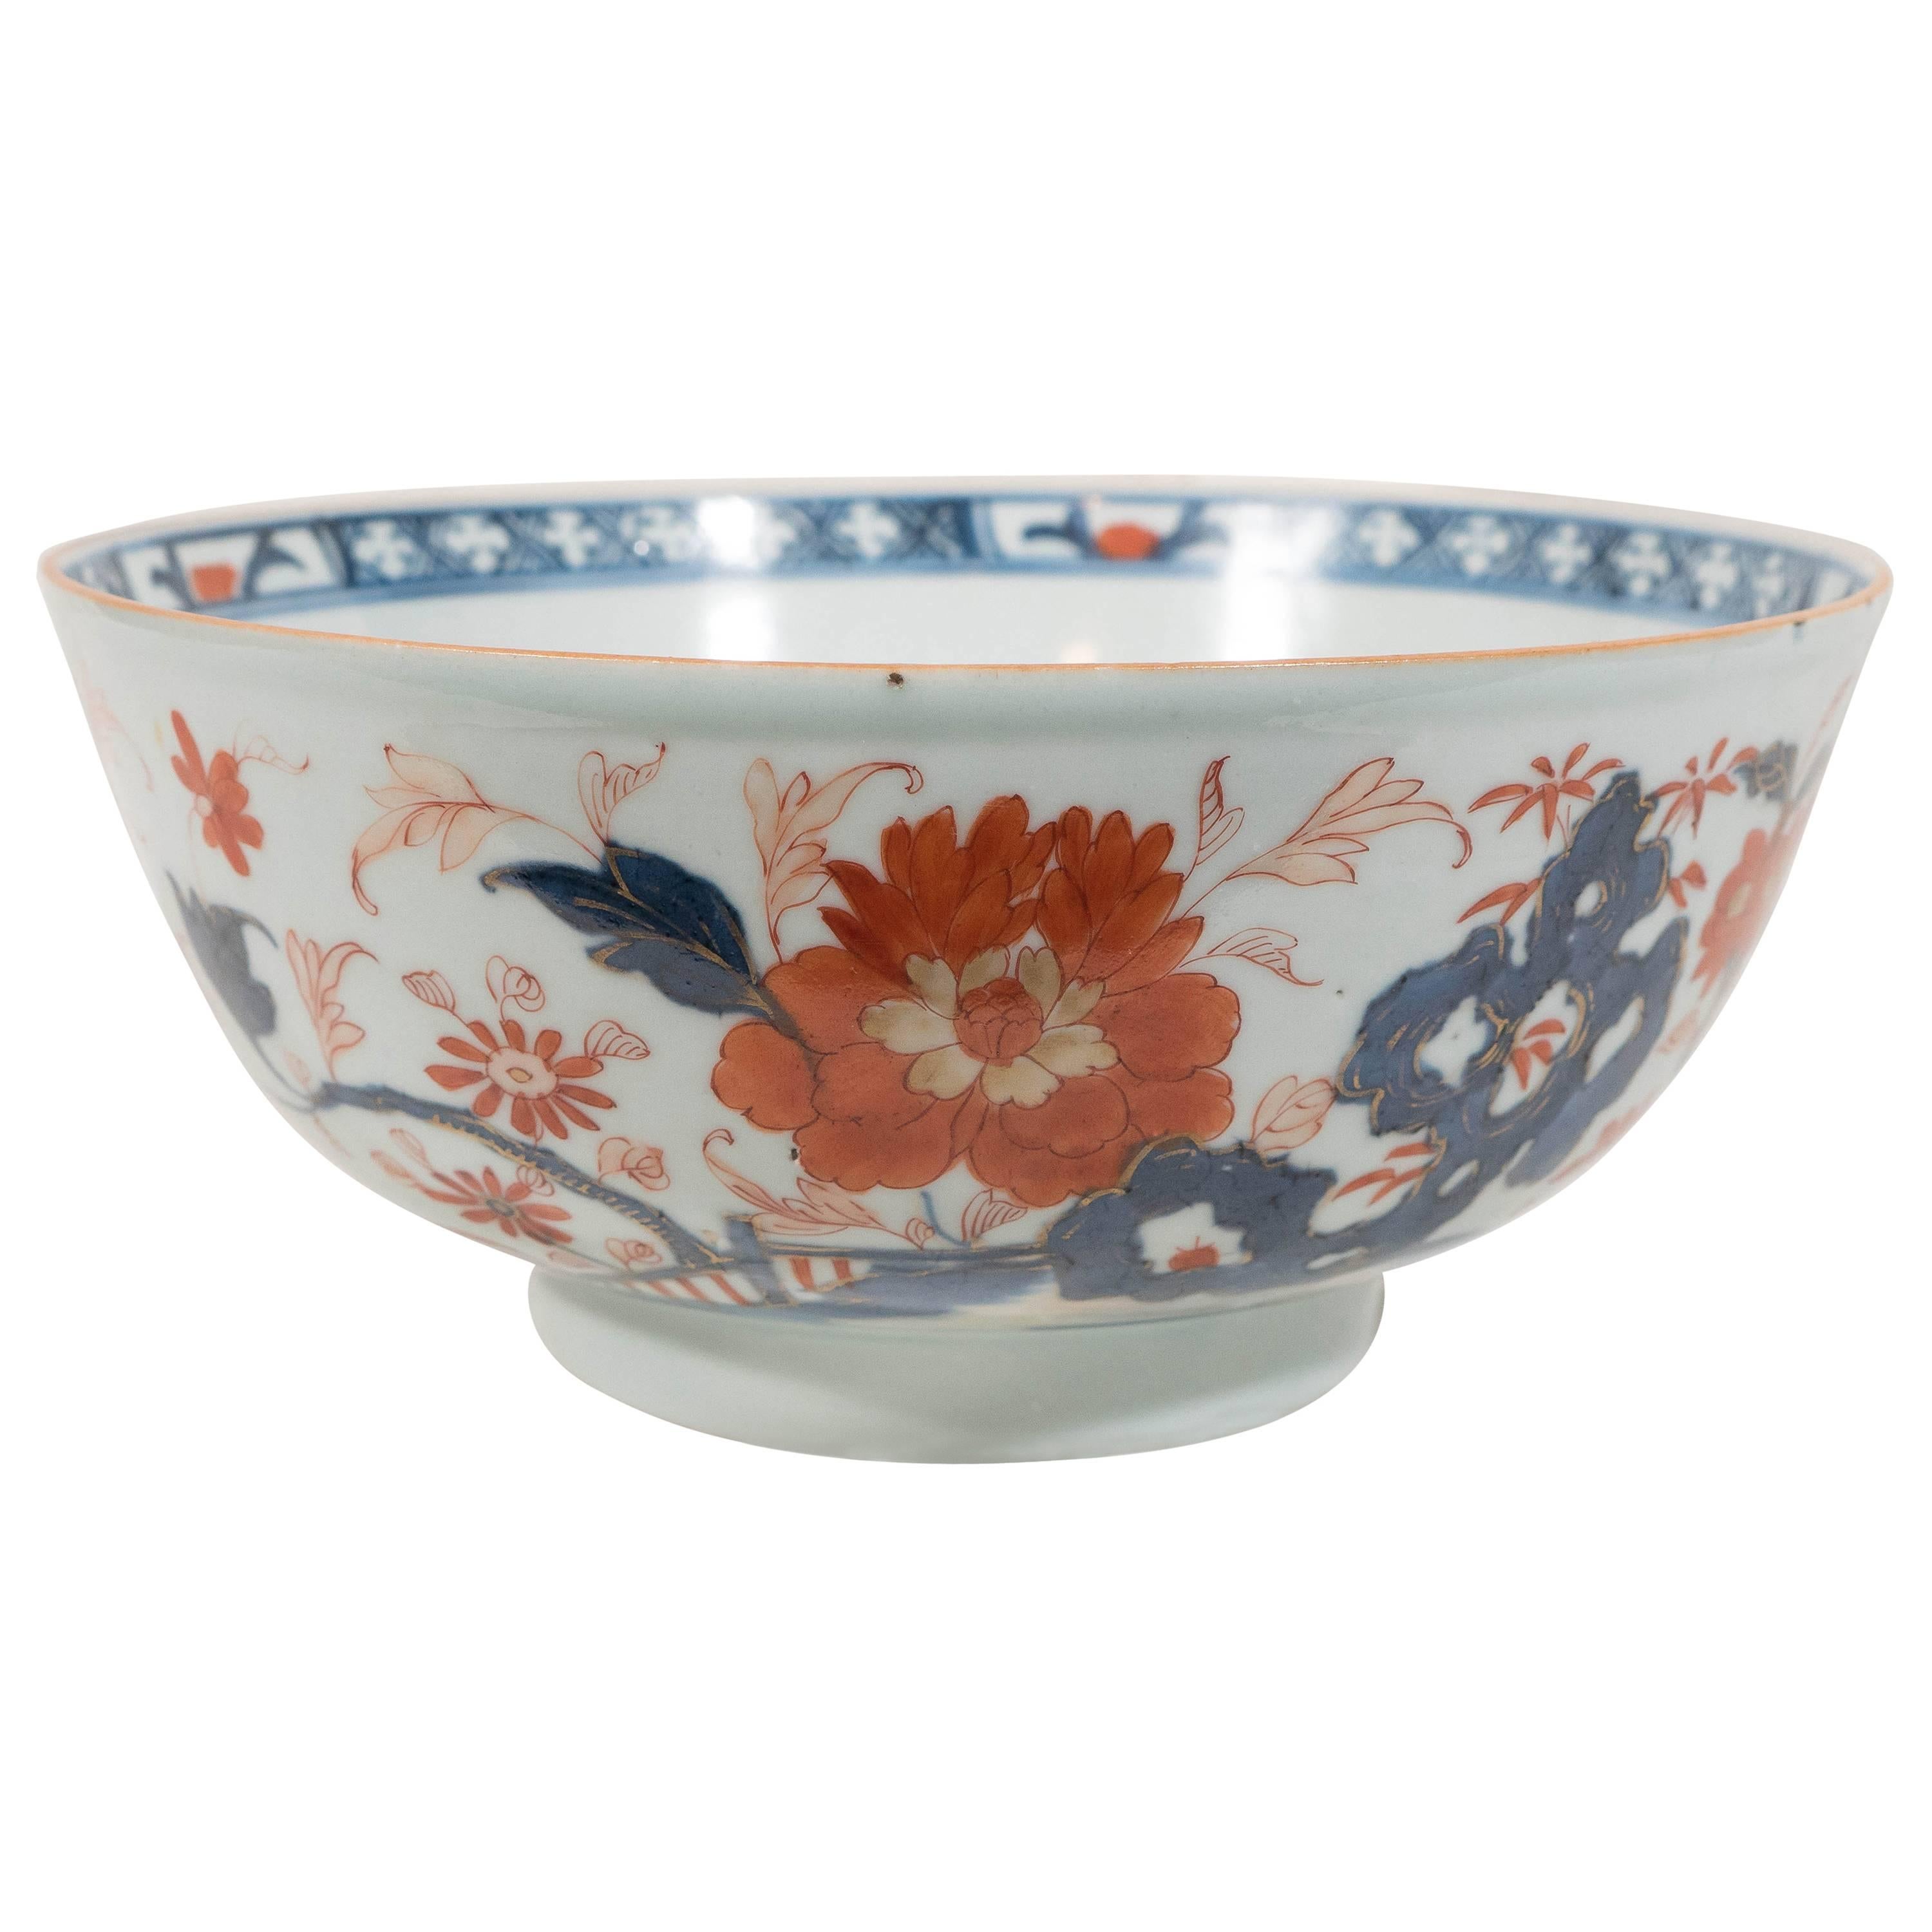 Antique Chinese Porcelain Imari Bowl